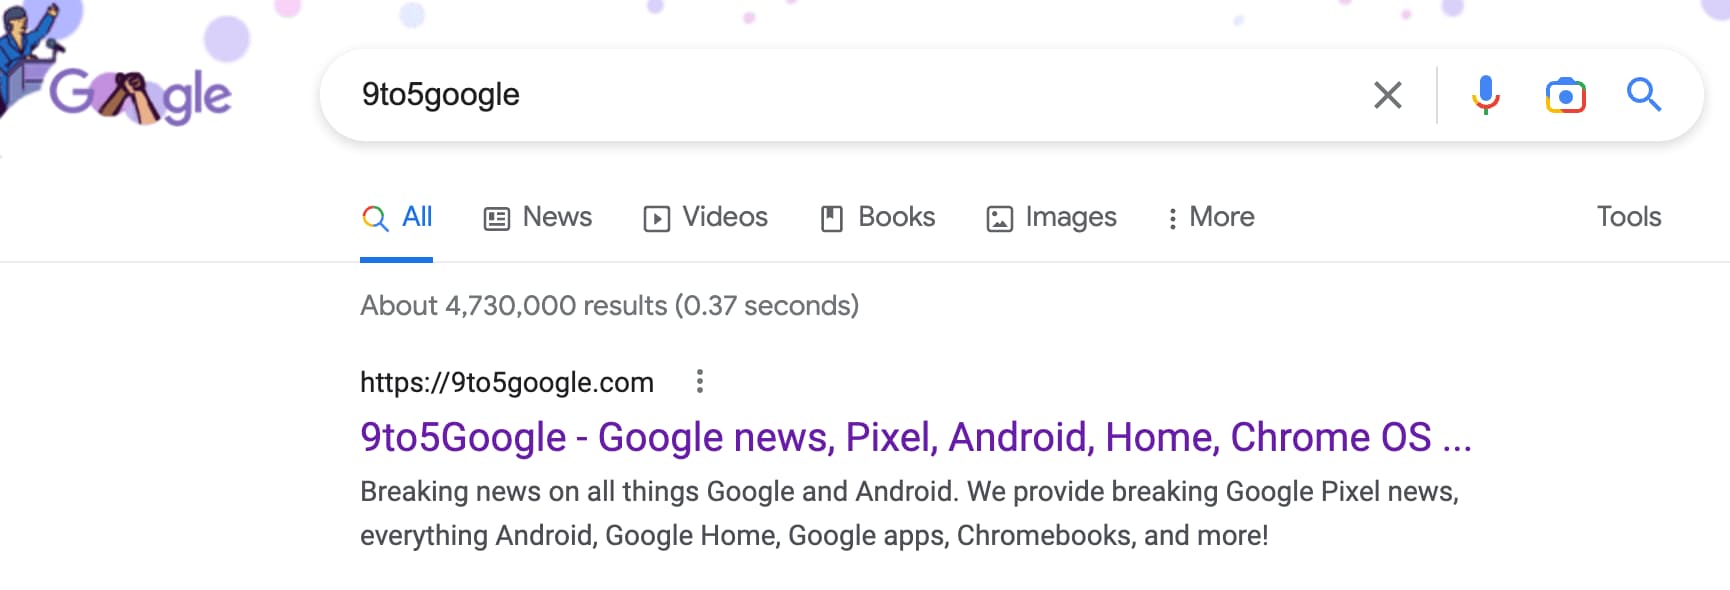 Google filter desktop search